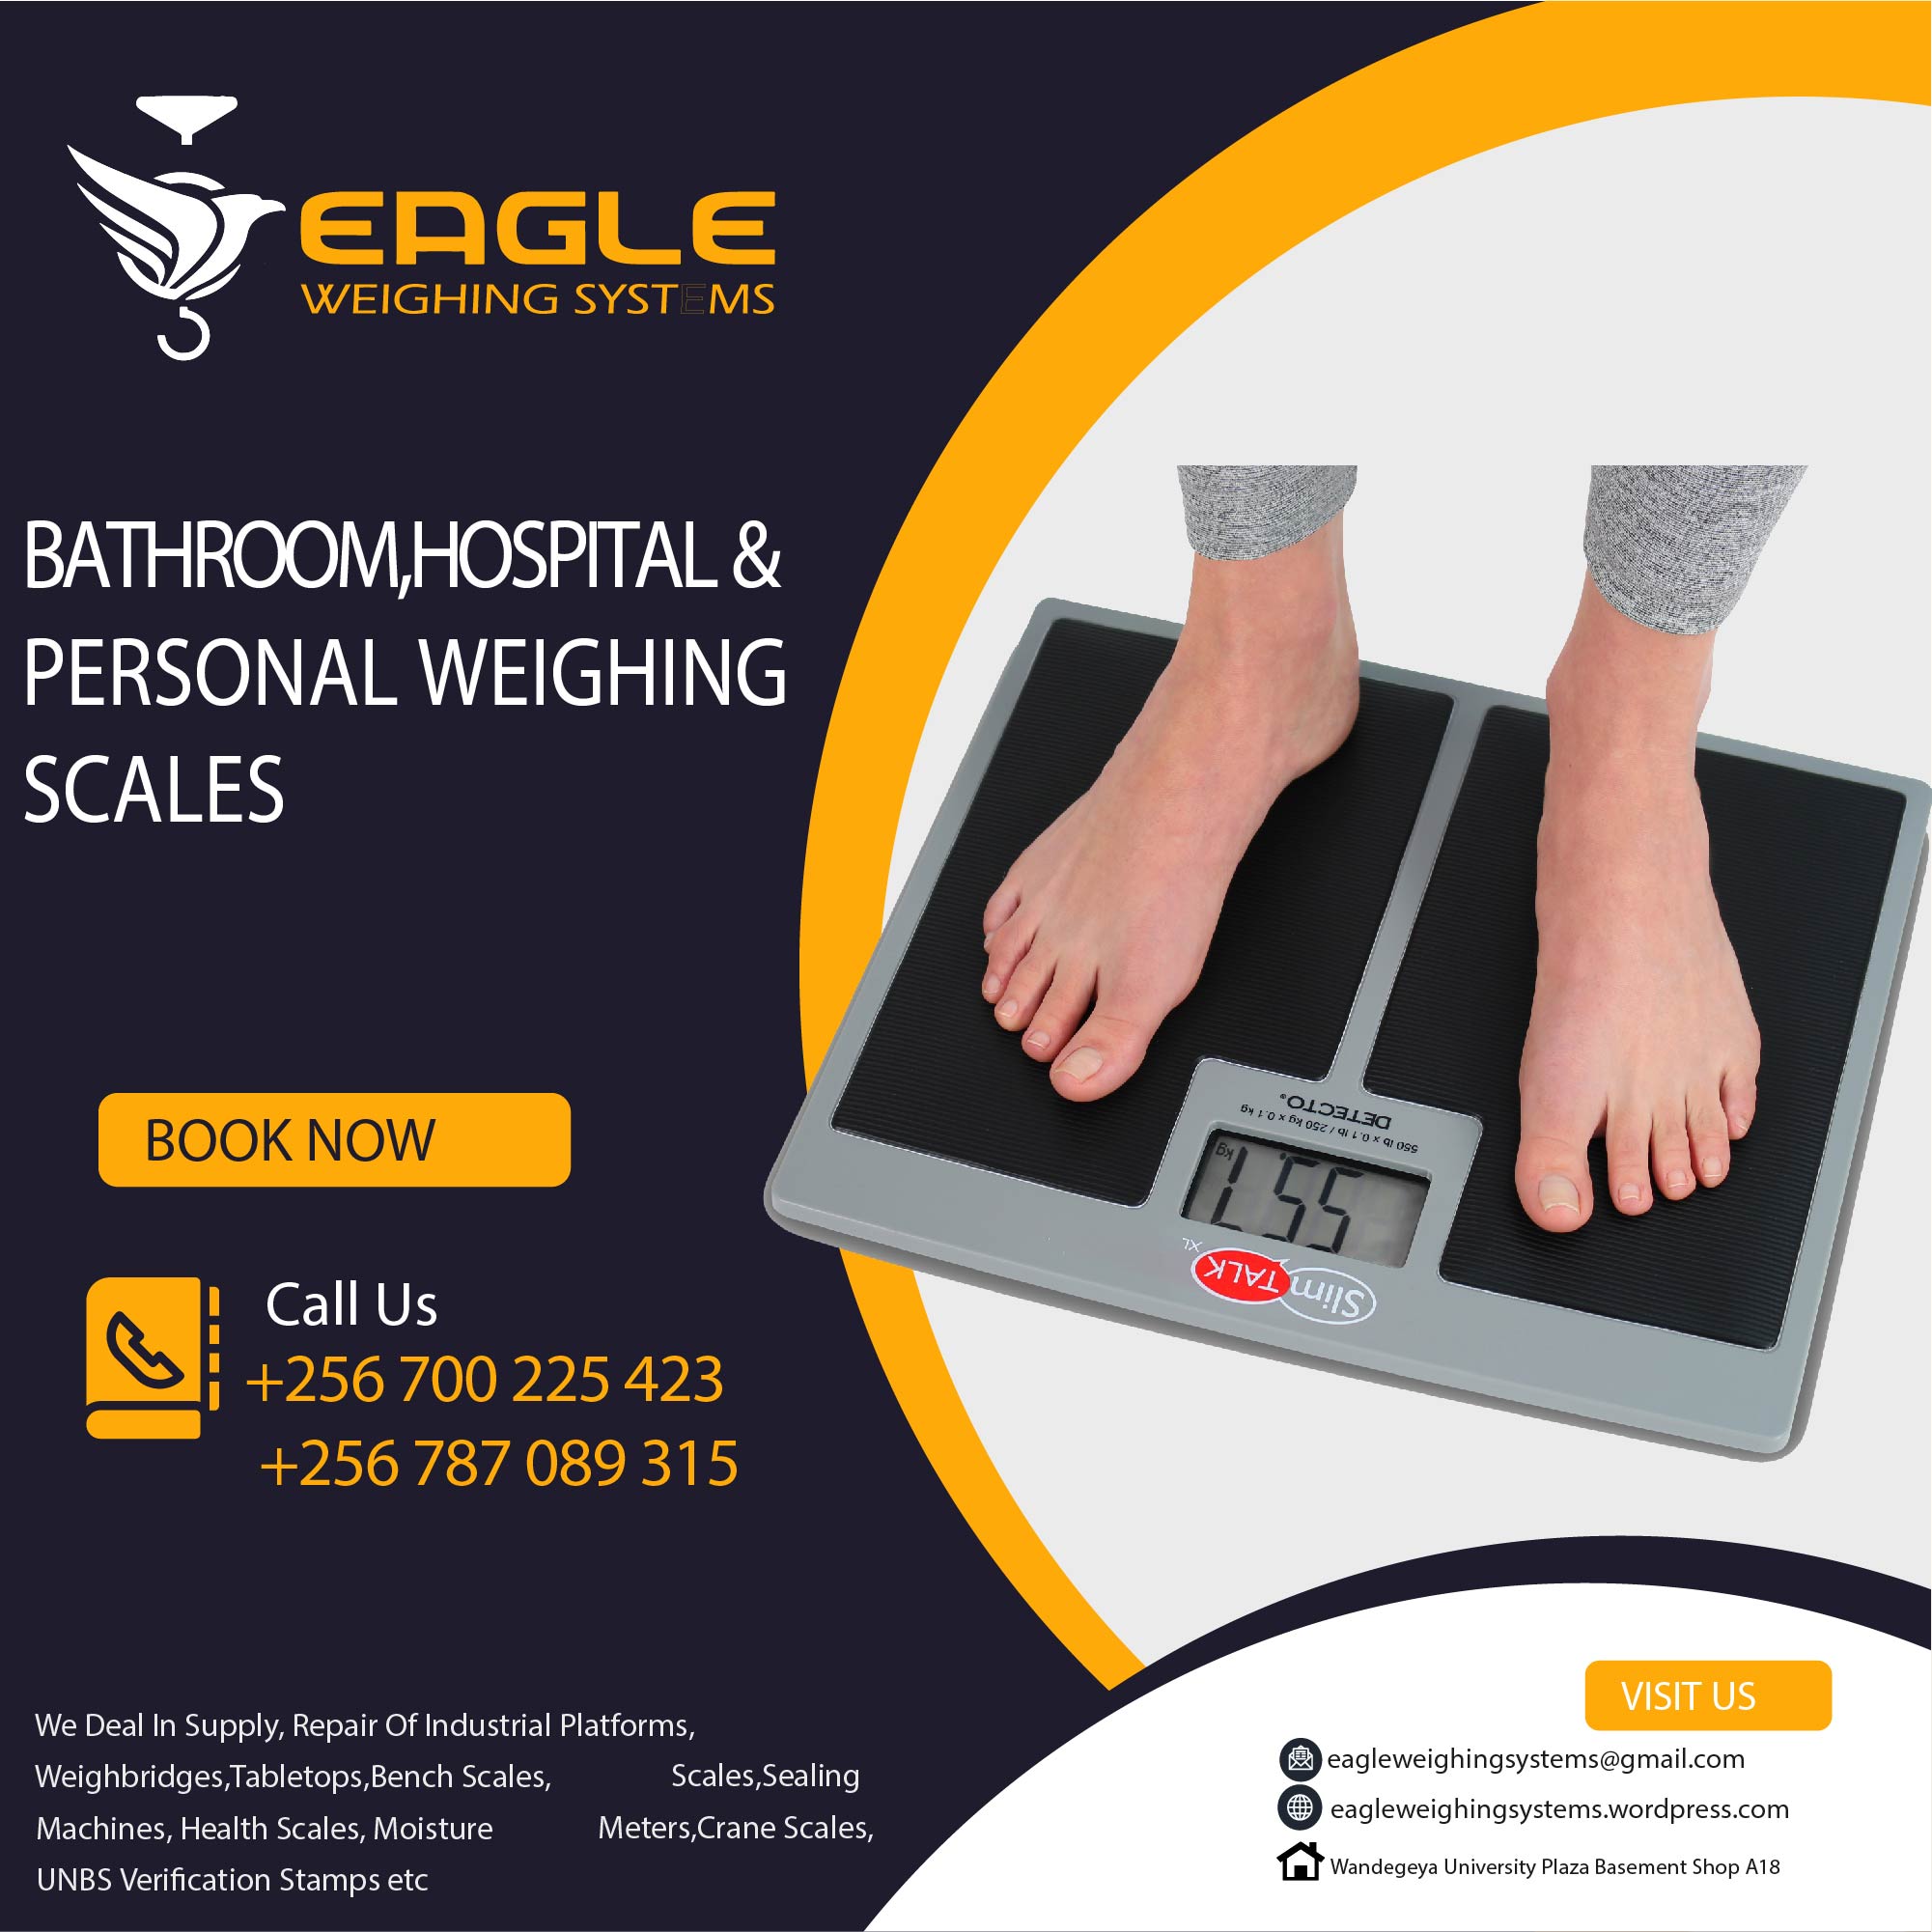 Crane Body Fat Scale